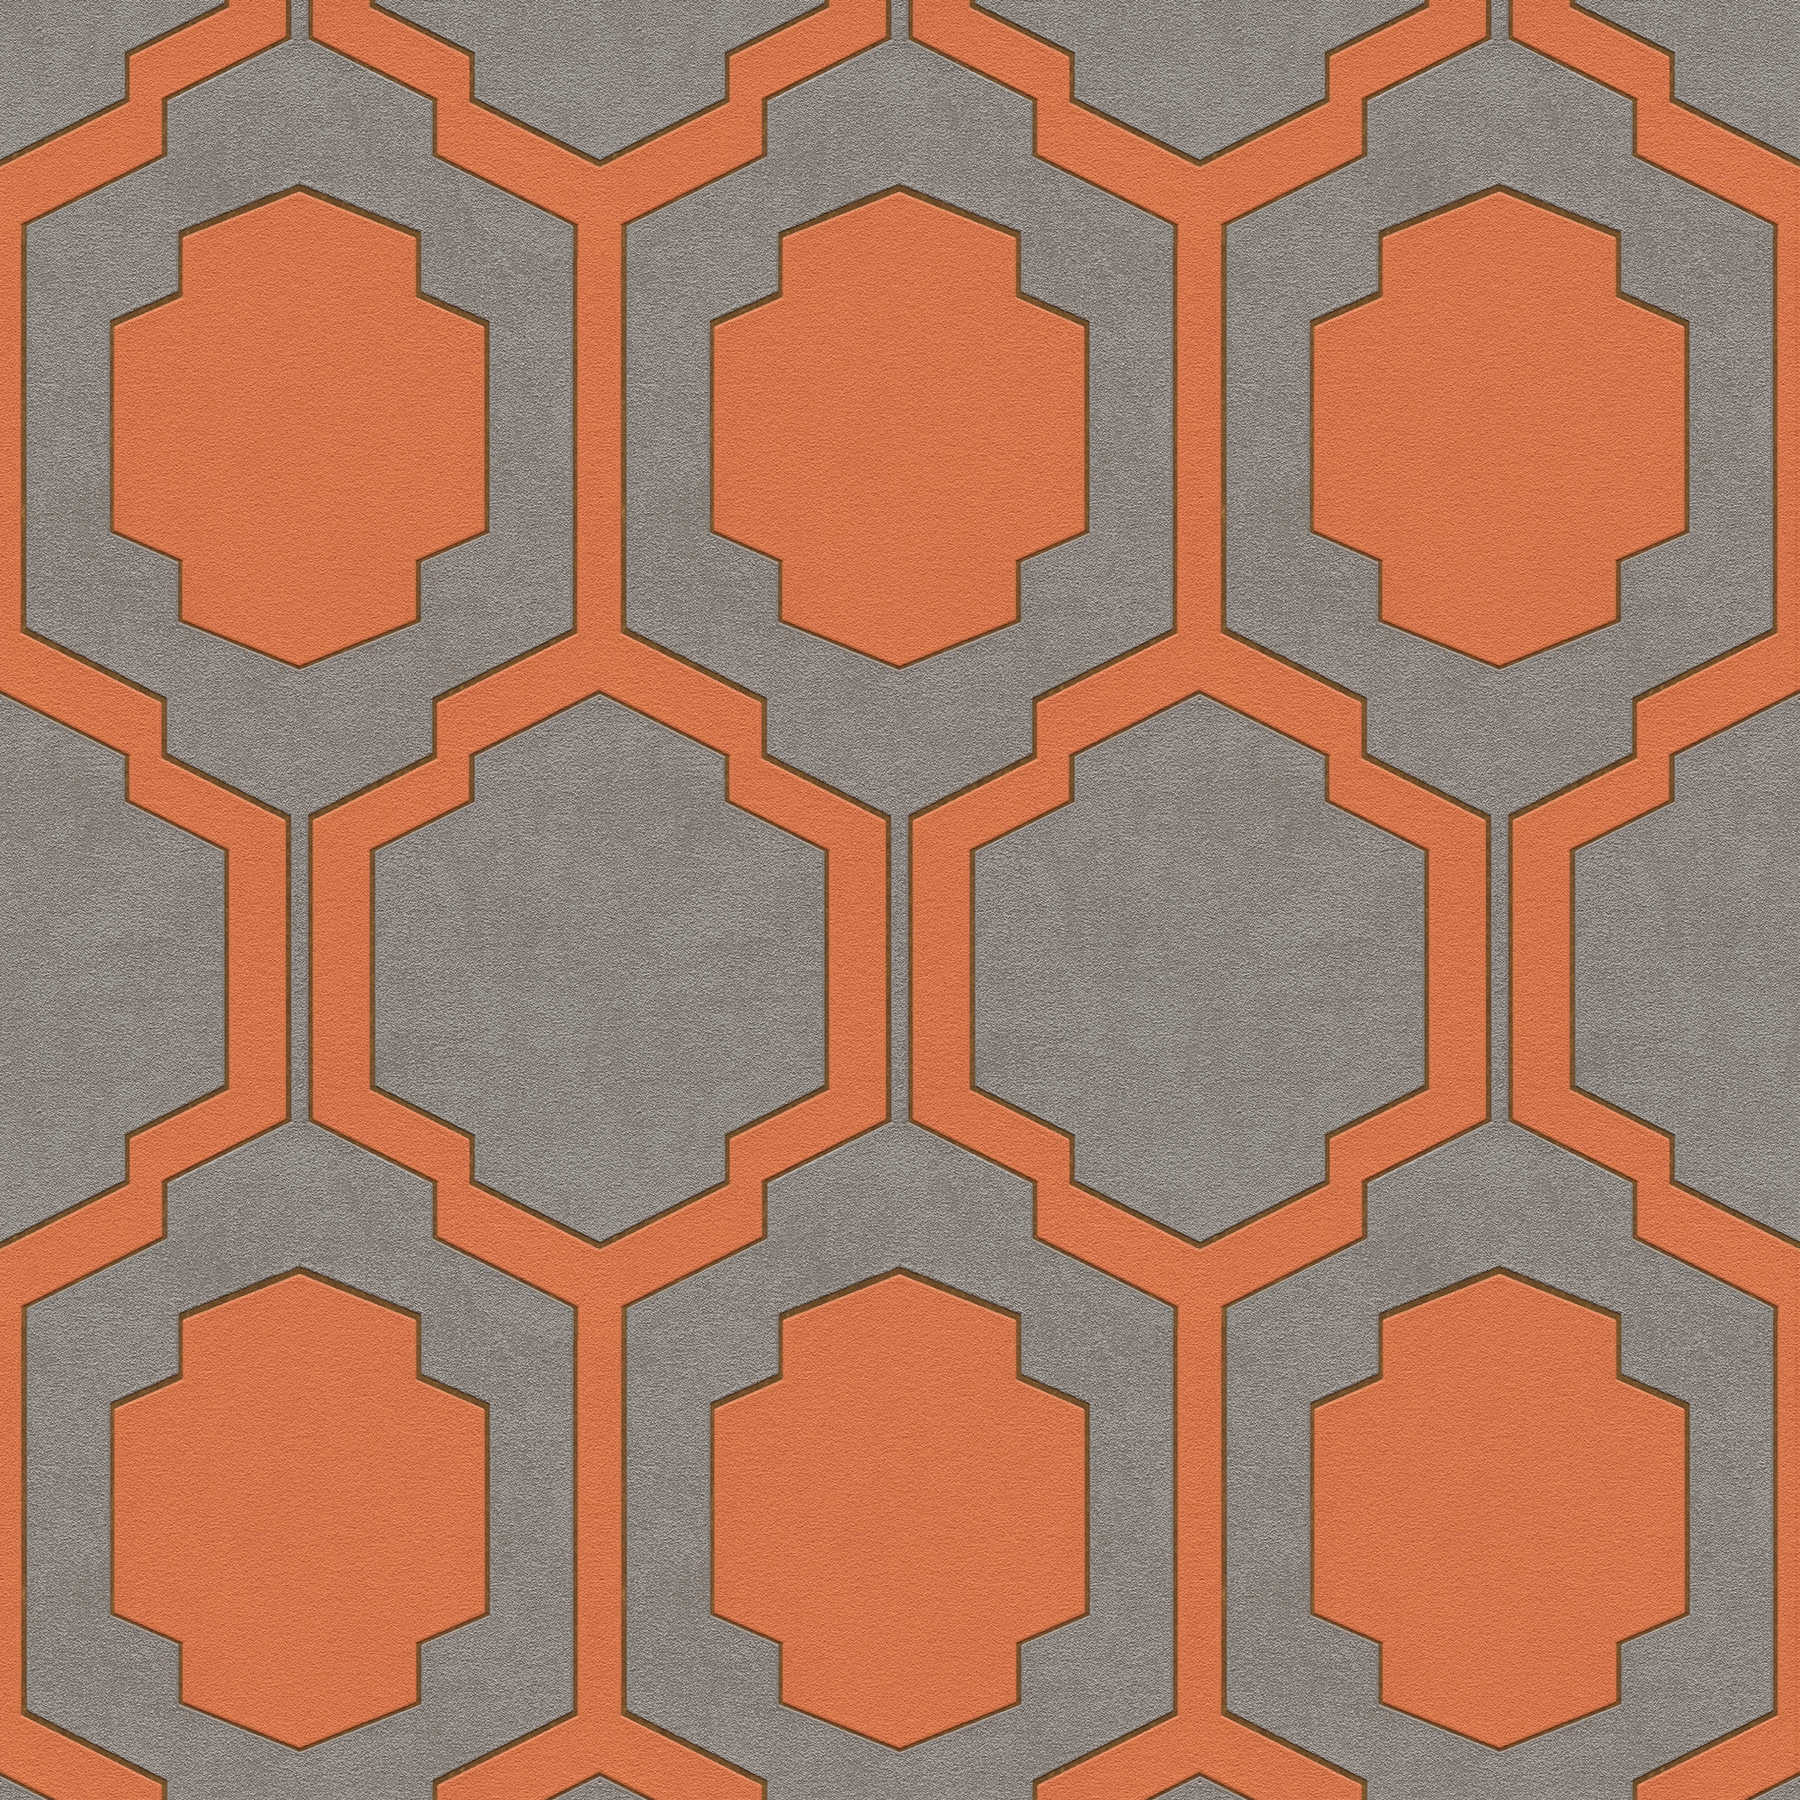 Pattern wallpaper retro look - orange, grey, beige
